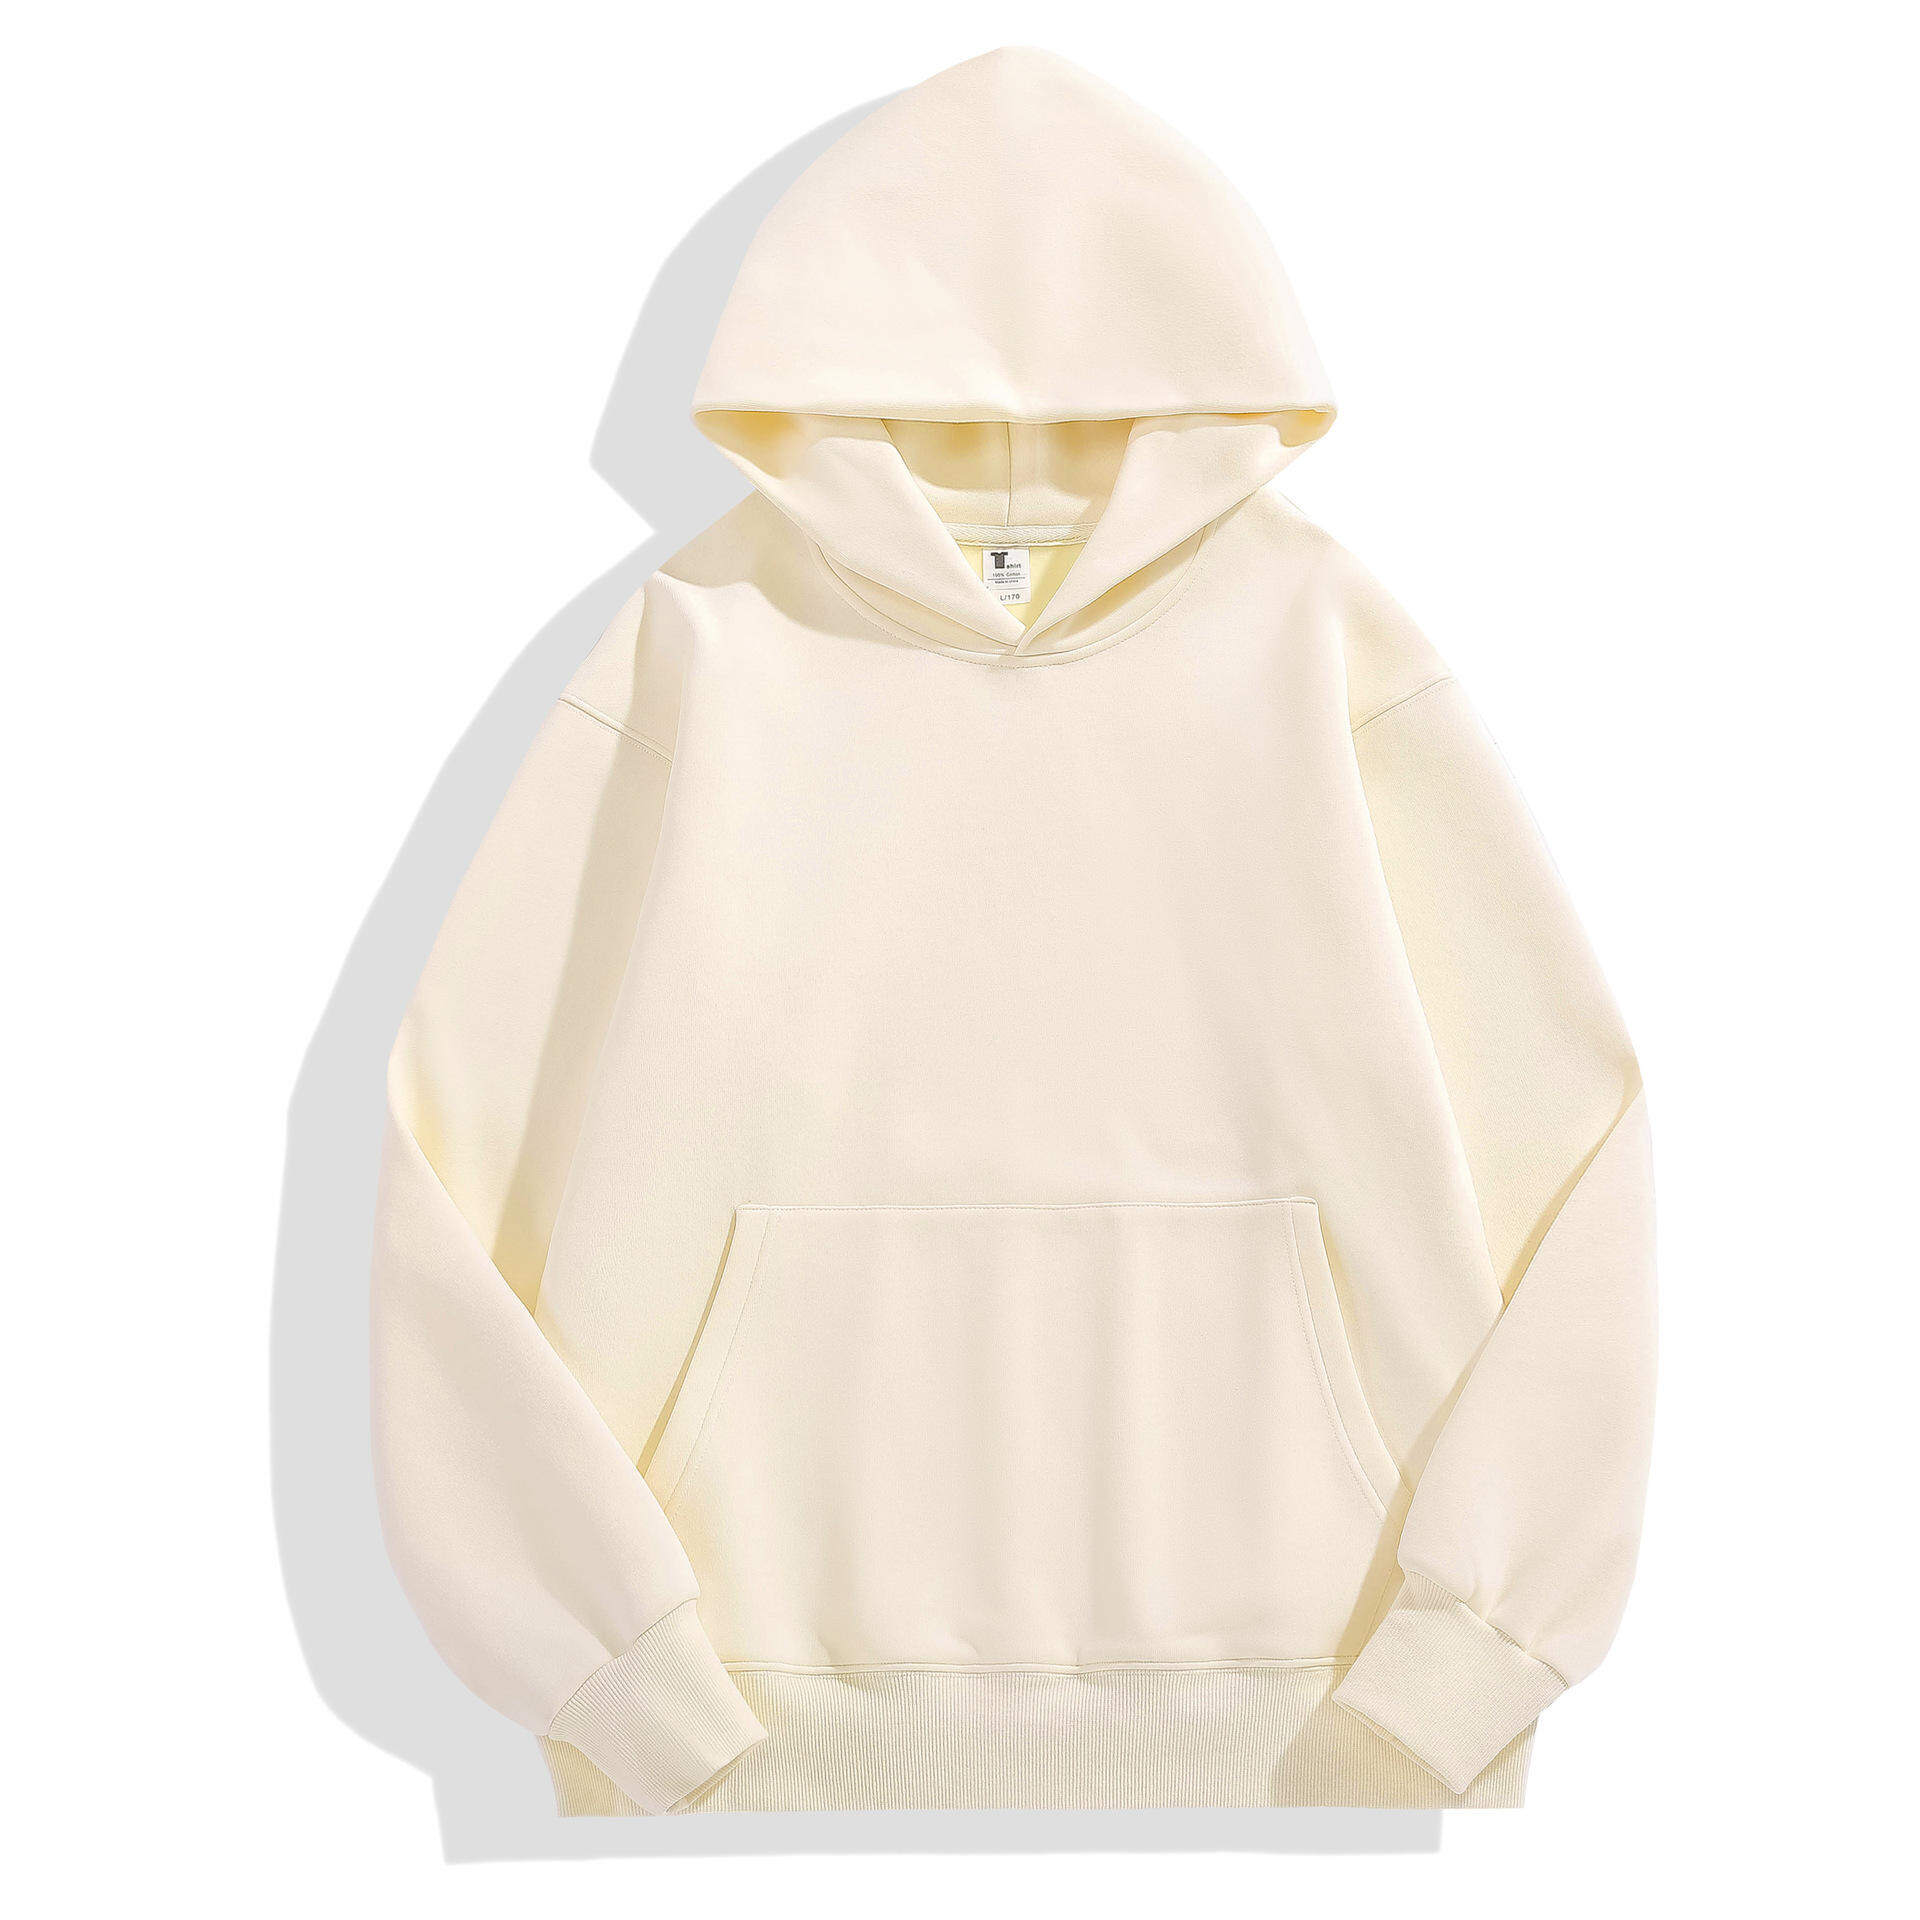 customized pullover hoodie sweatshirts, diamond supply pullover hoodie, mens pullover hoodie wholesale, plain pullover hoodies in bulk, blank pullover hoodies wholesale